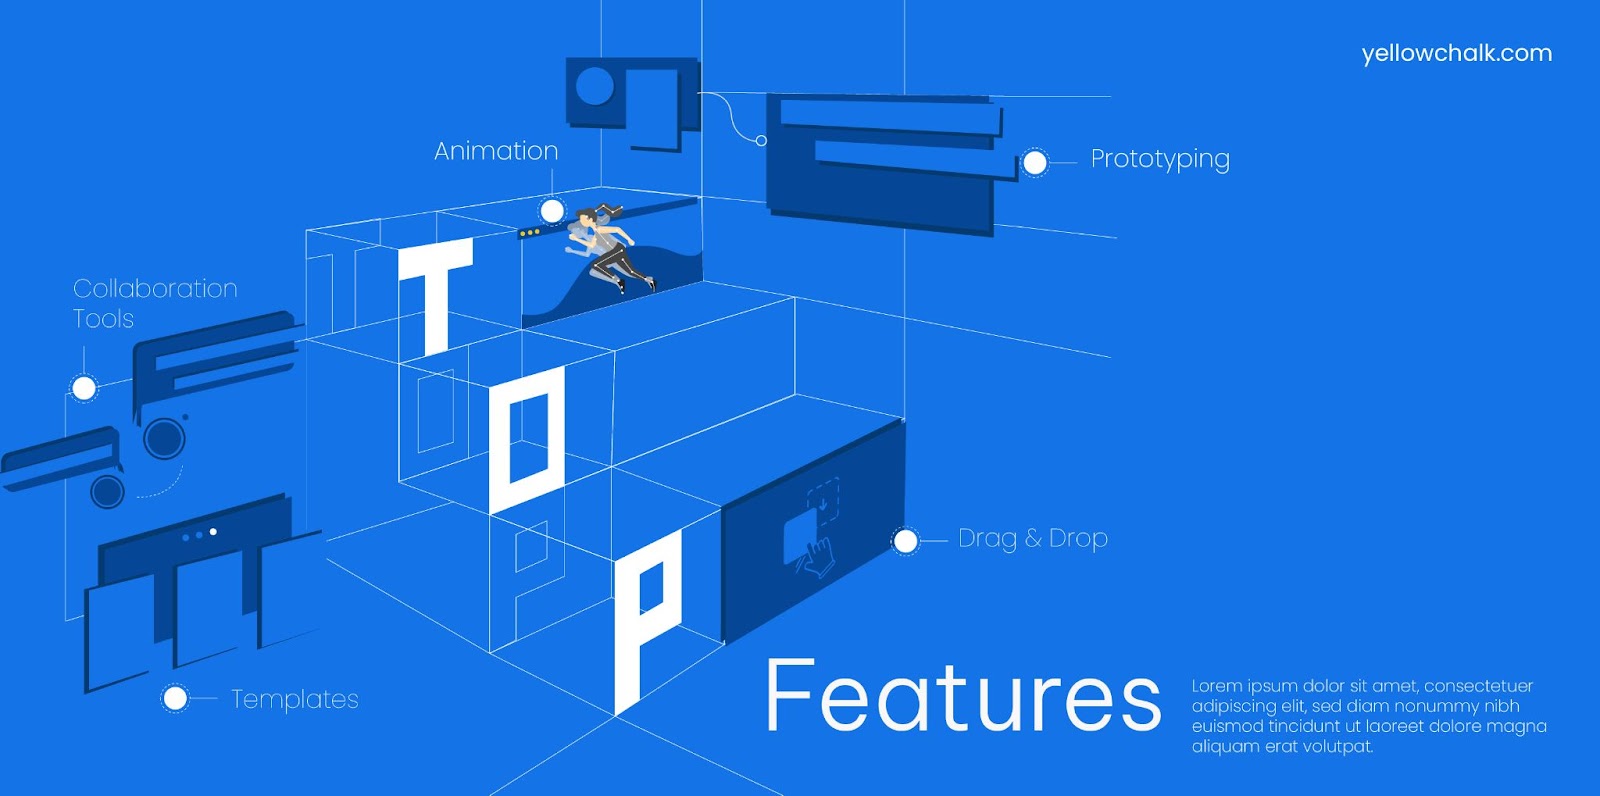 Top Features - Adobe XD & Figma - Yellowchalk